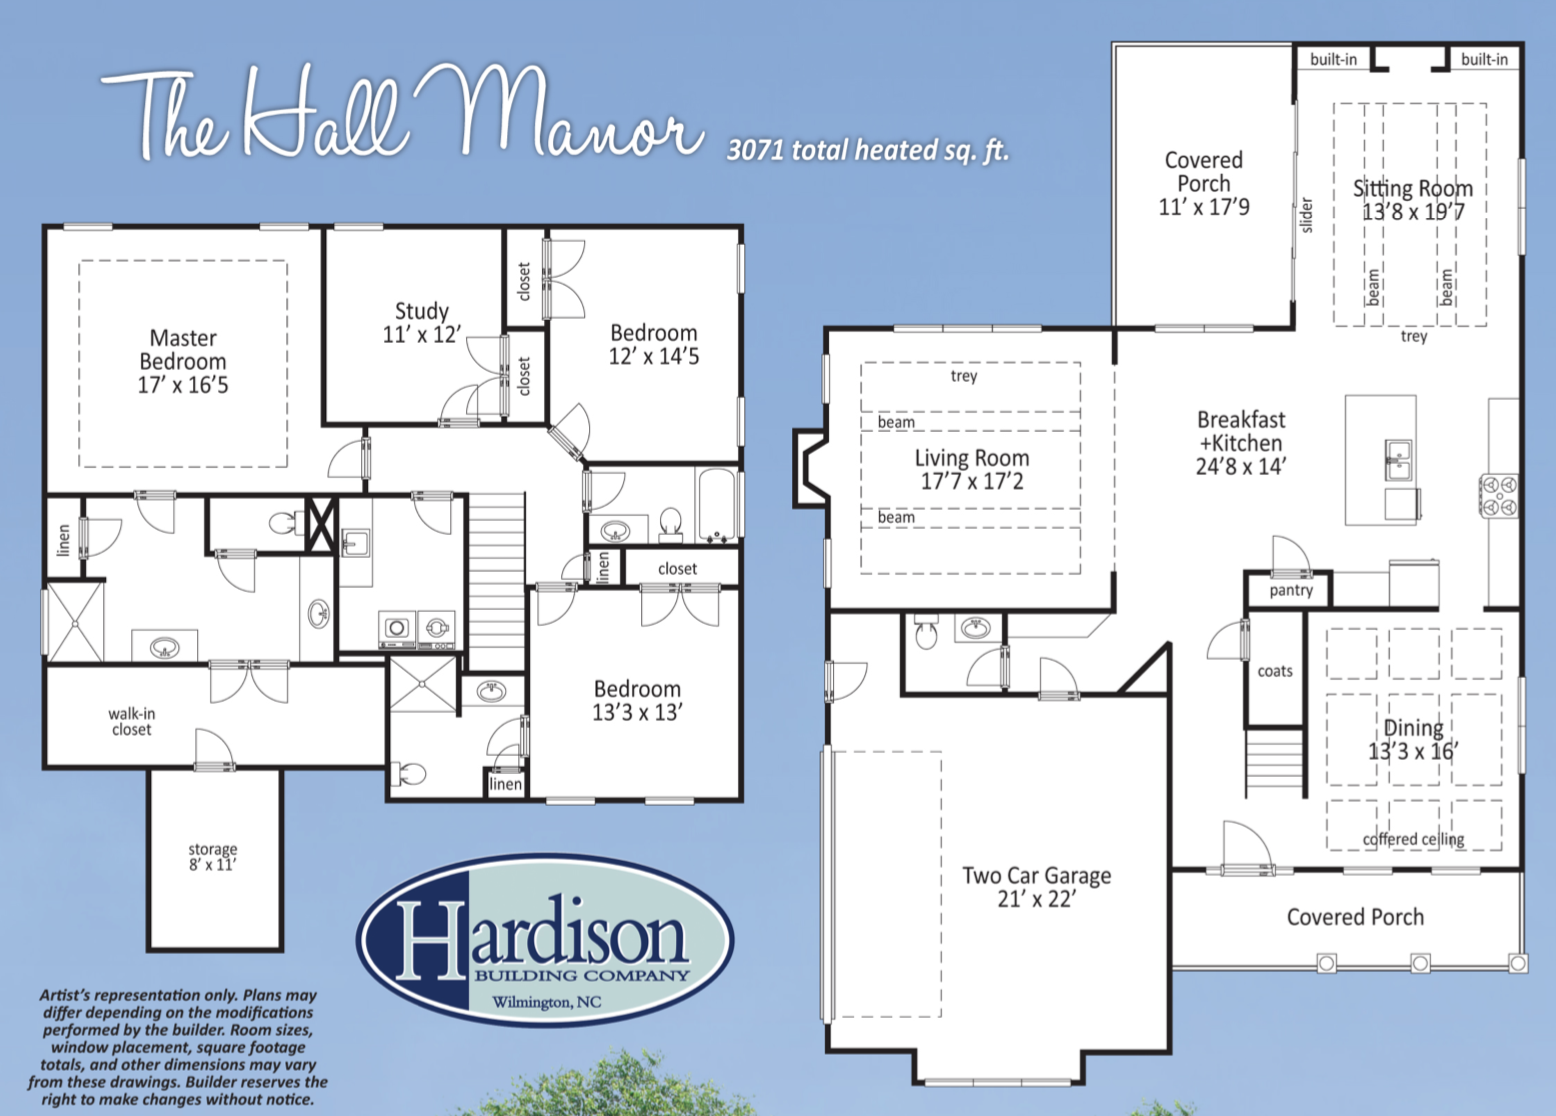 The Hall Manor floor plan image